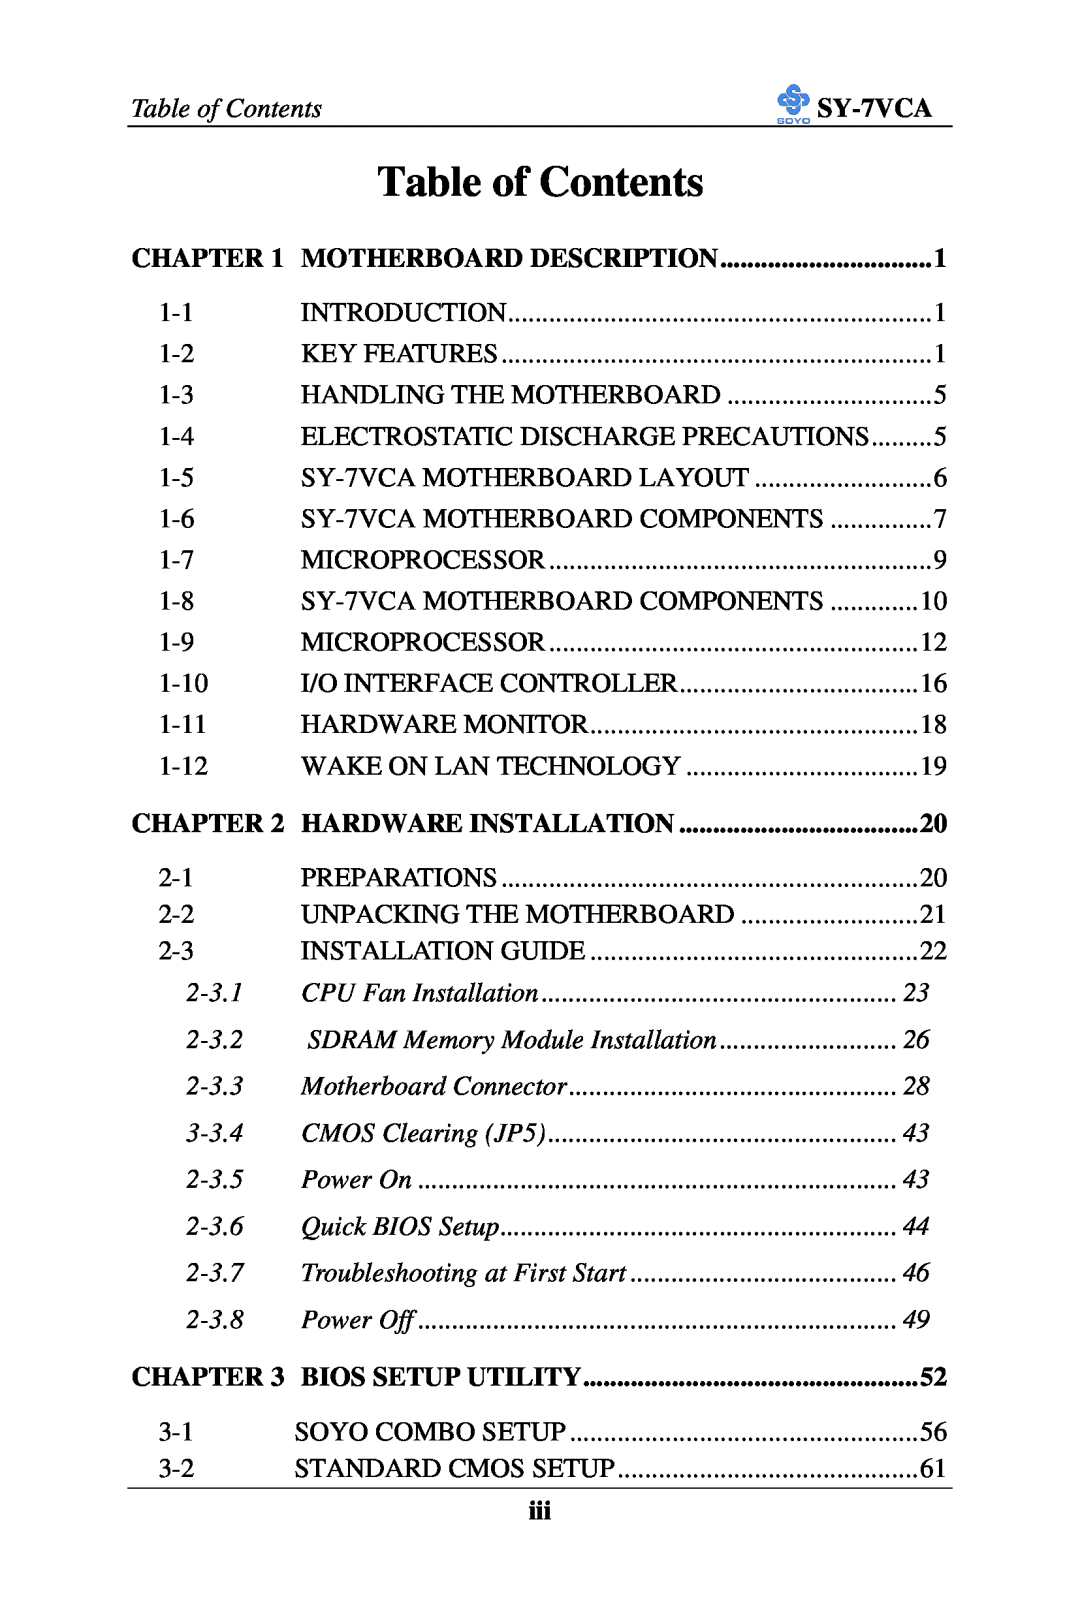 SOYO SY-7VCA user manual Motherboard Description, Hardware Installation, Bios Setup Utility, Table of Contents 